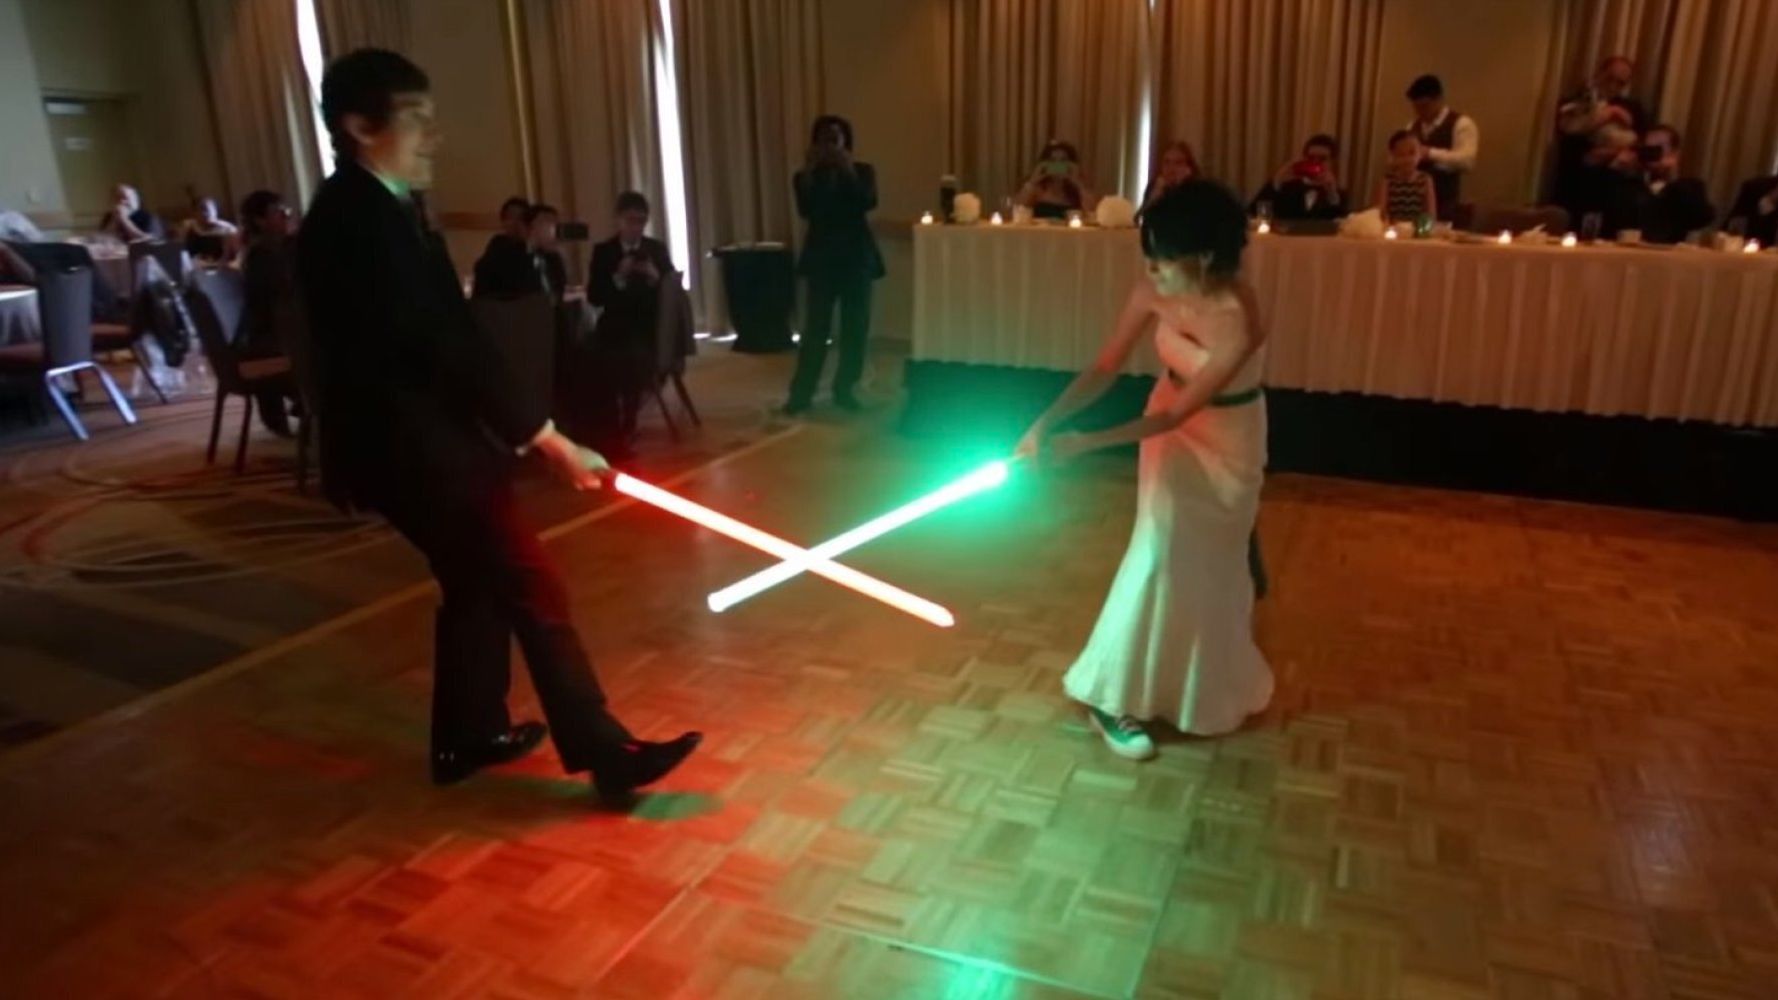 Star Wars Fans Have Epic Lightsaber Battle At Wedding Instead Of First 4938